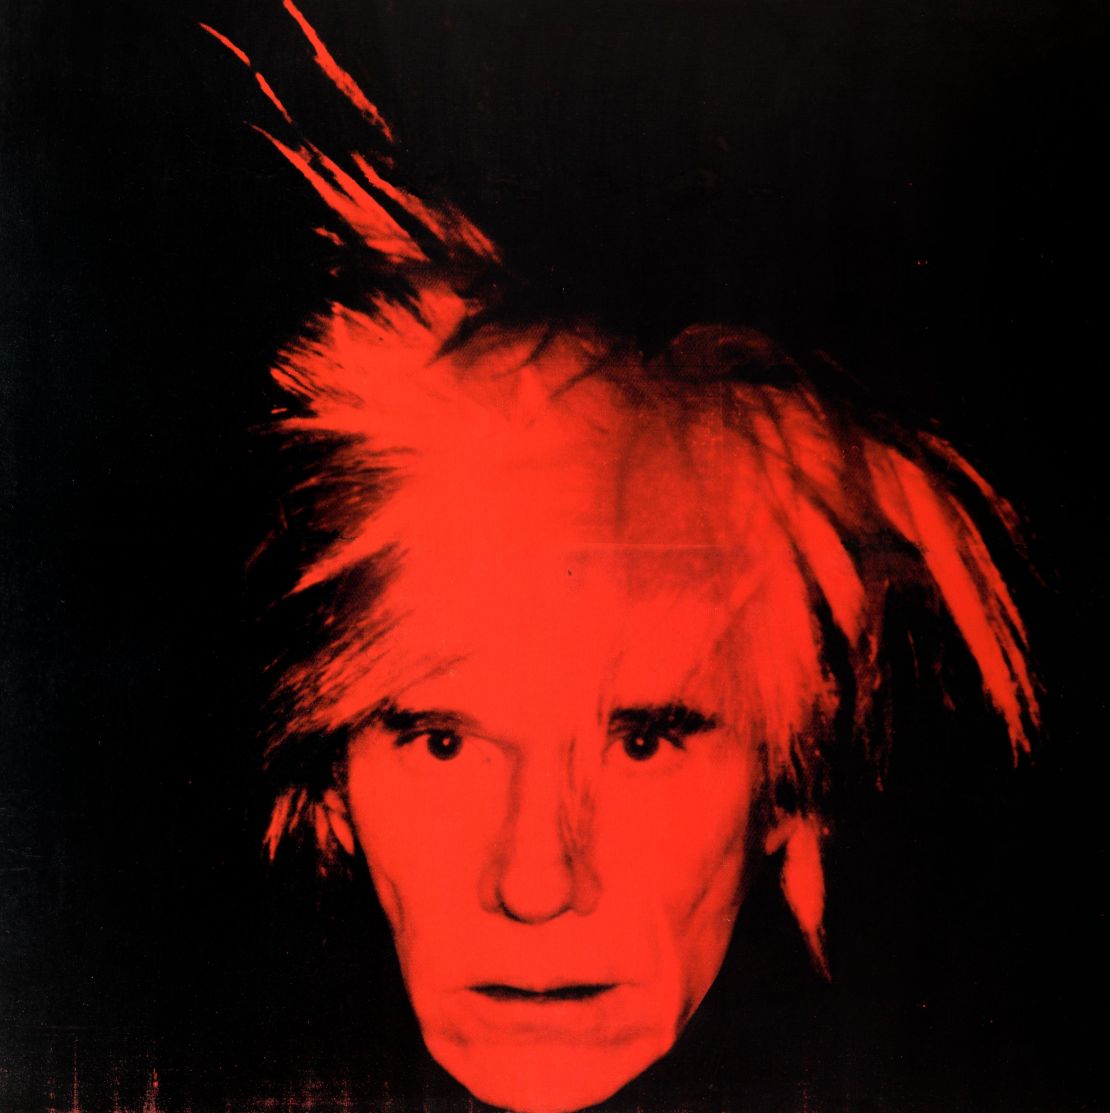 "Self-Portrait," by Andy Warhol